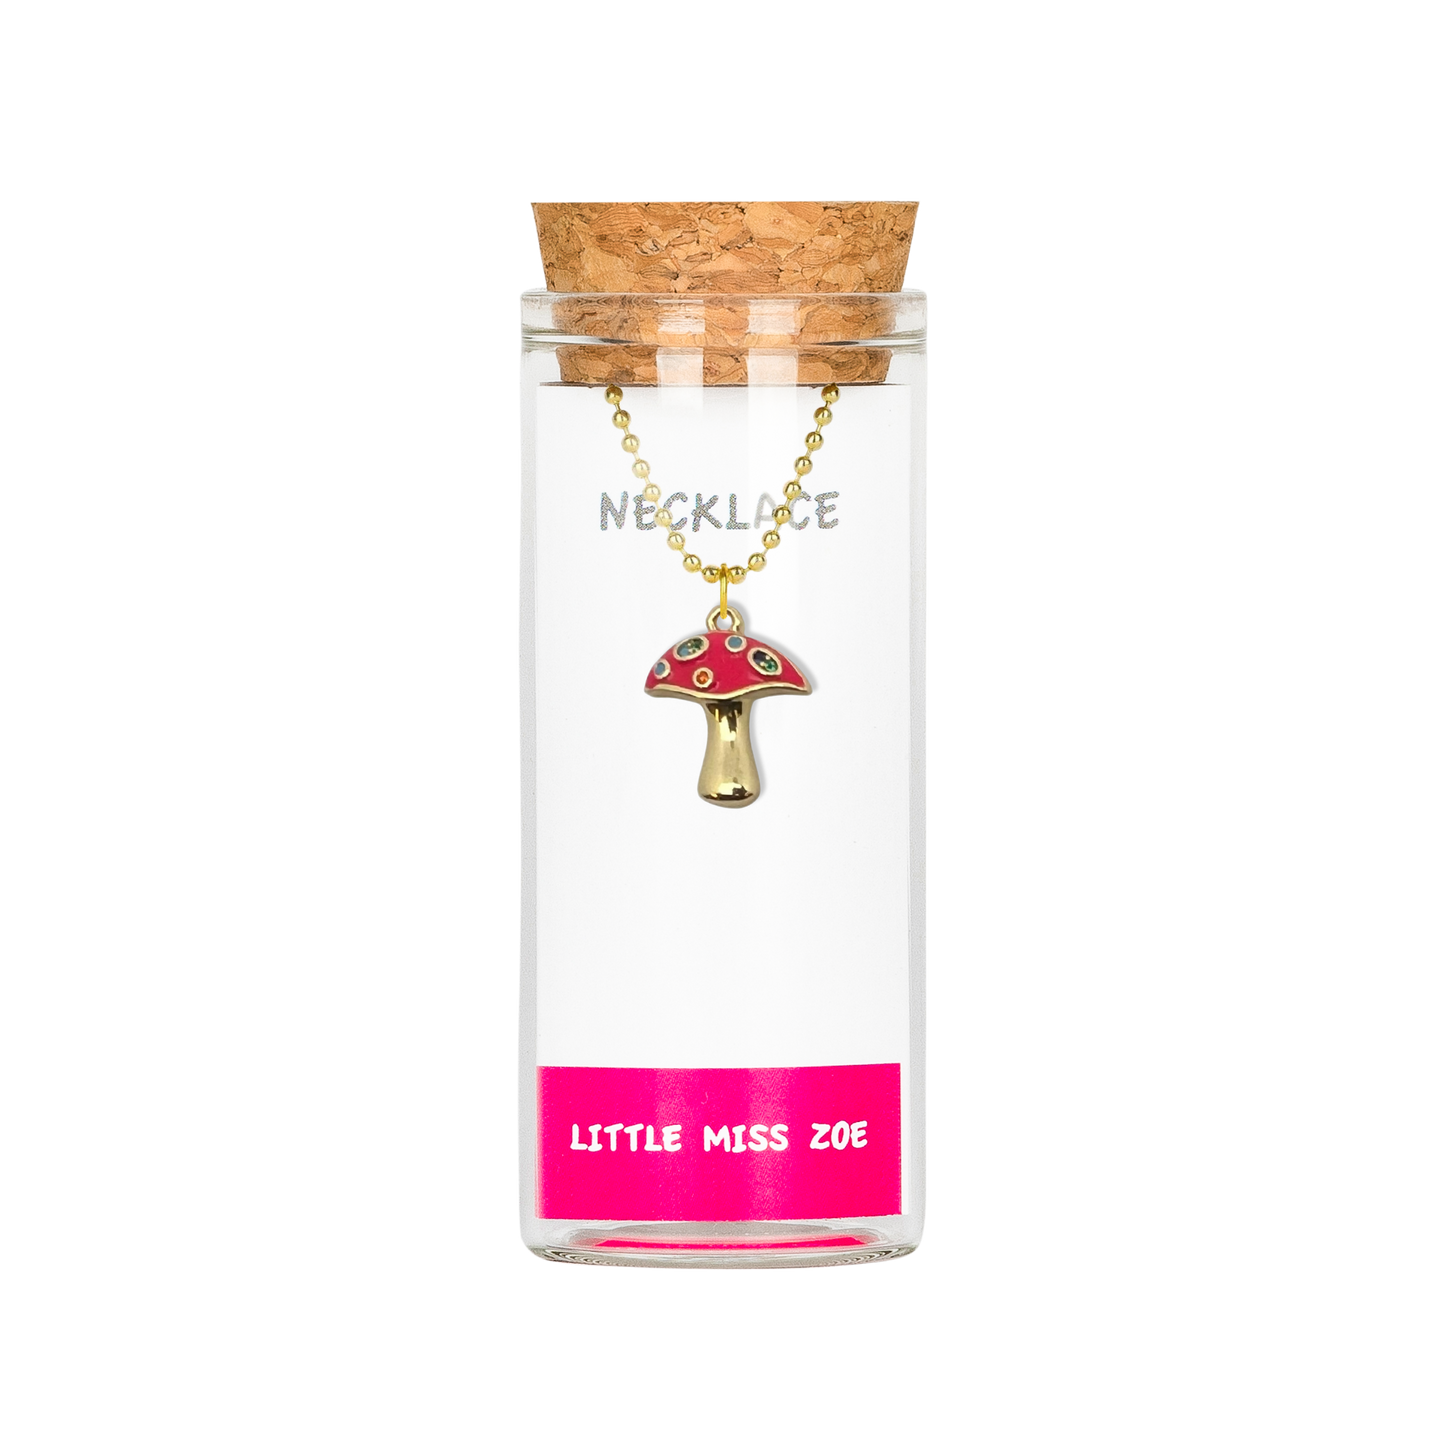 Mushroom Necklace in a Bottle